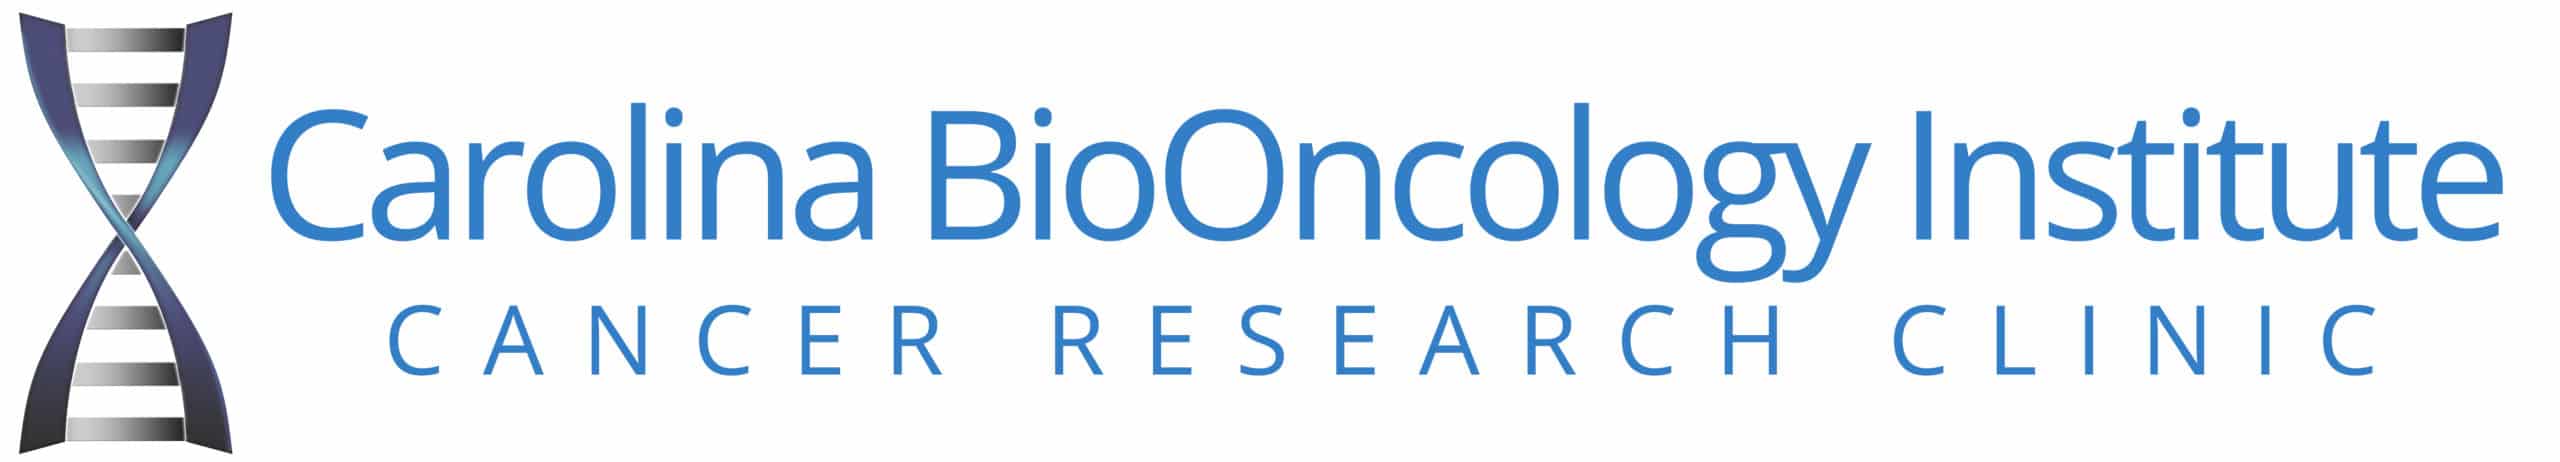 Carolina BioOncology Institute cancer research clinic logo